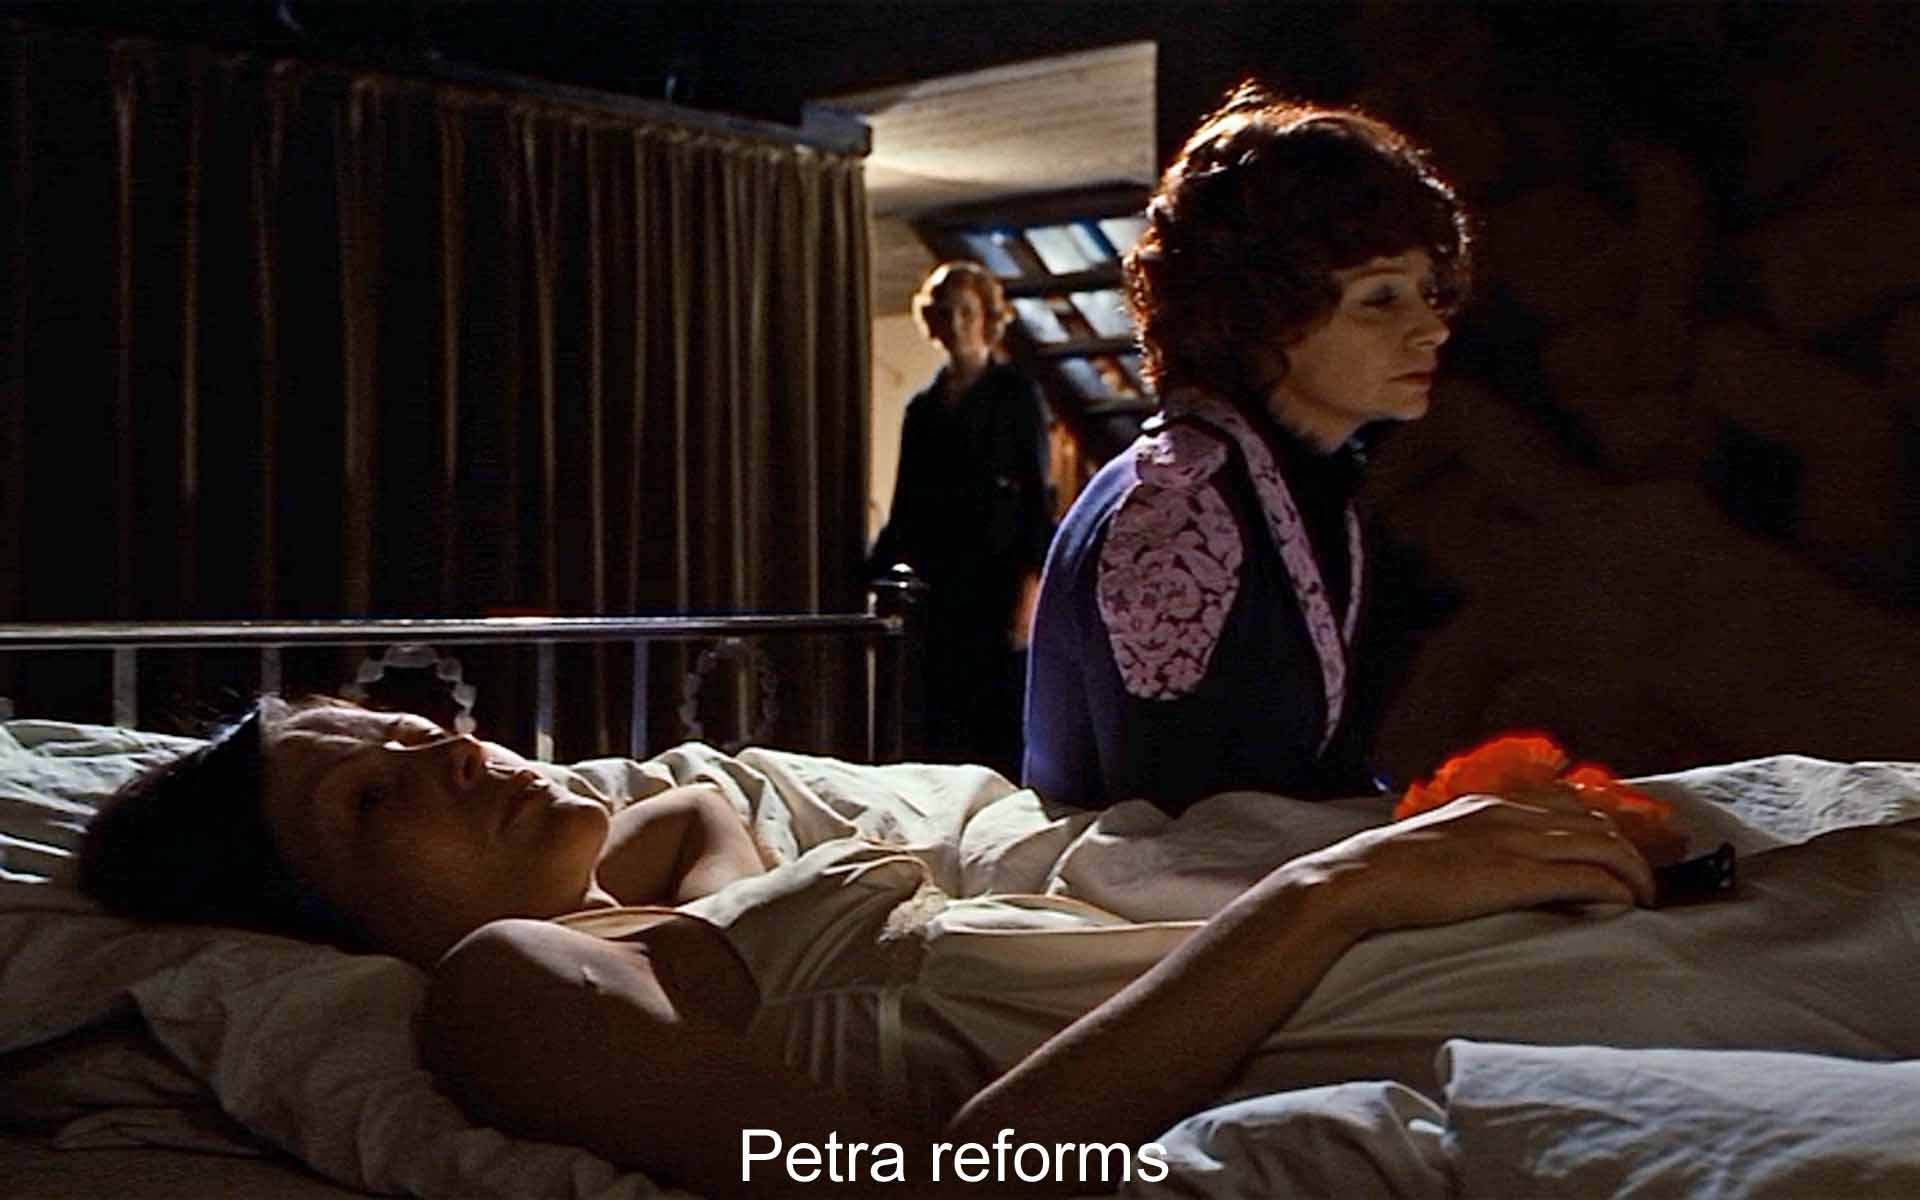 Petra reformed